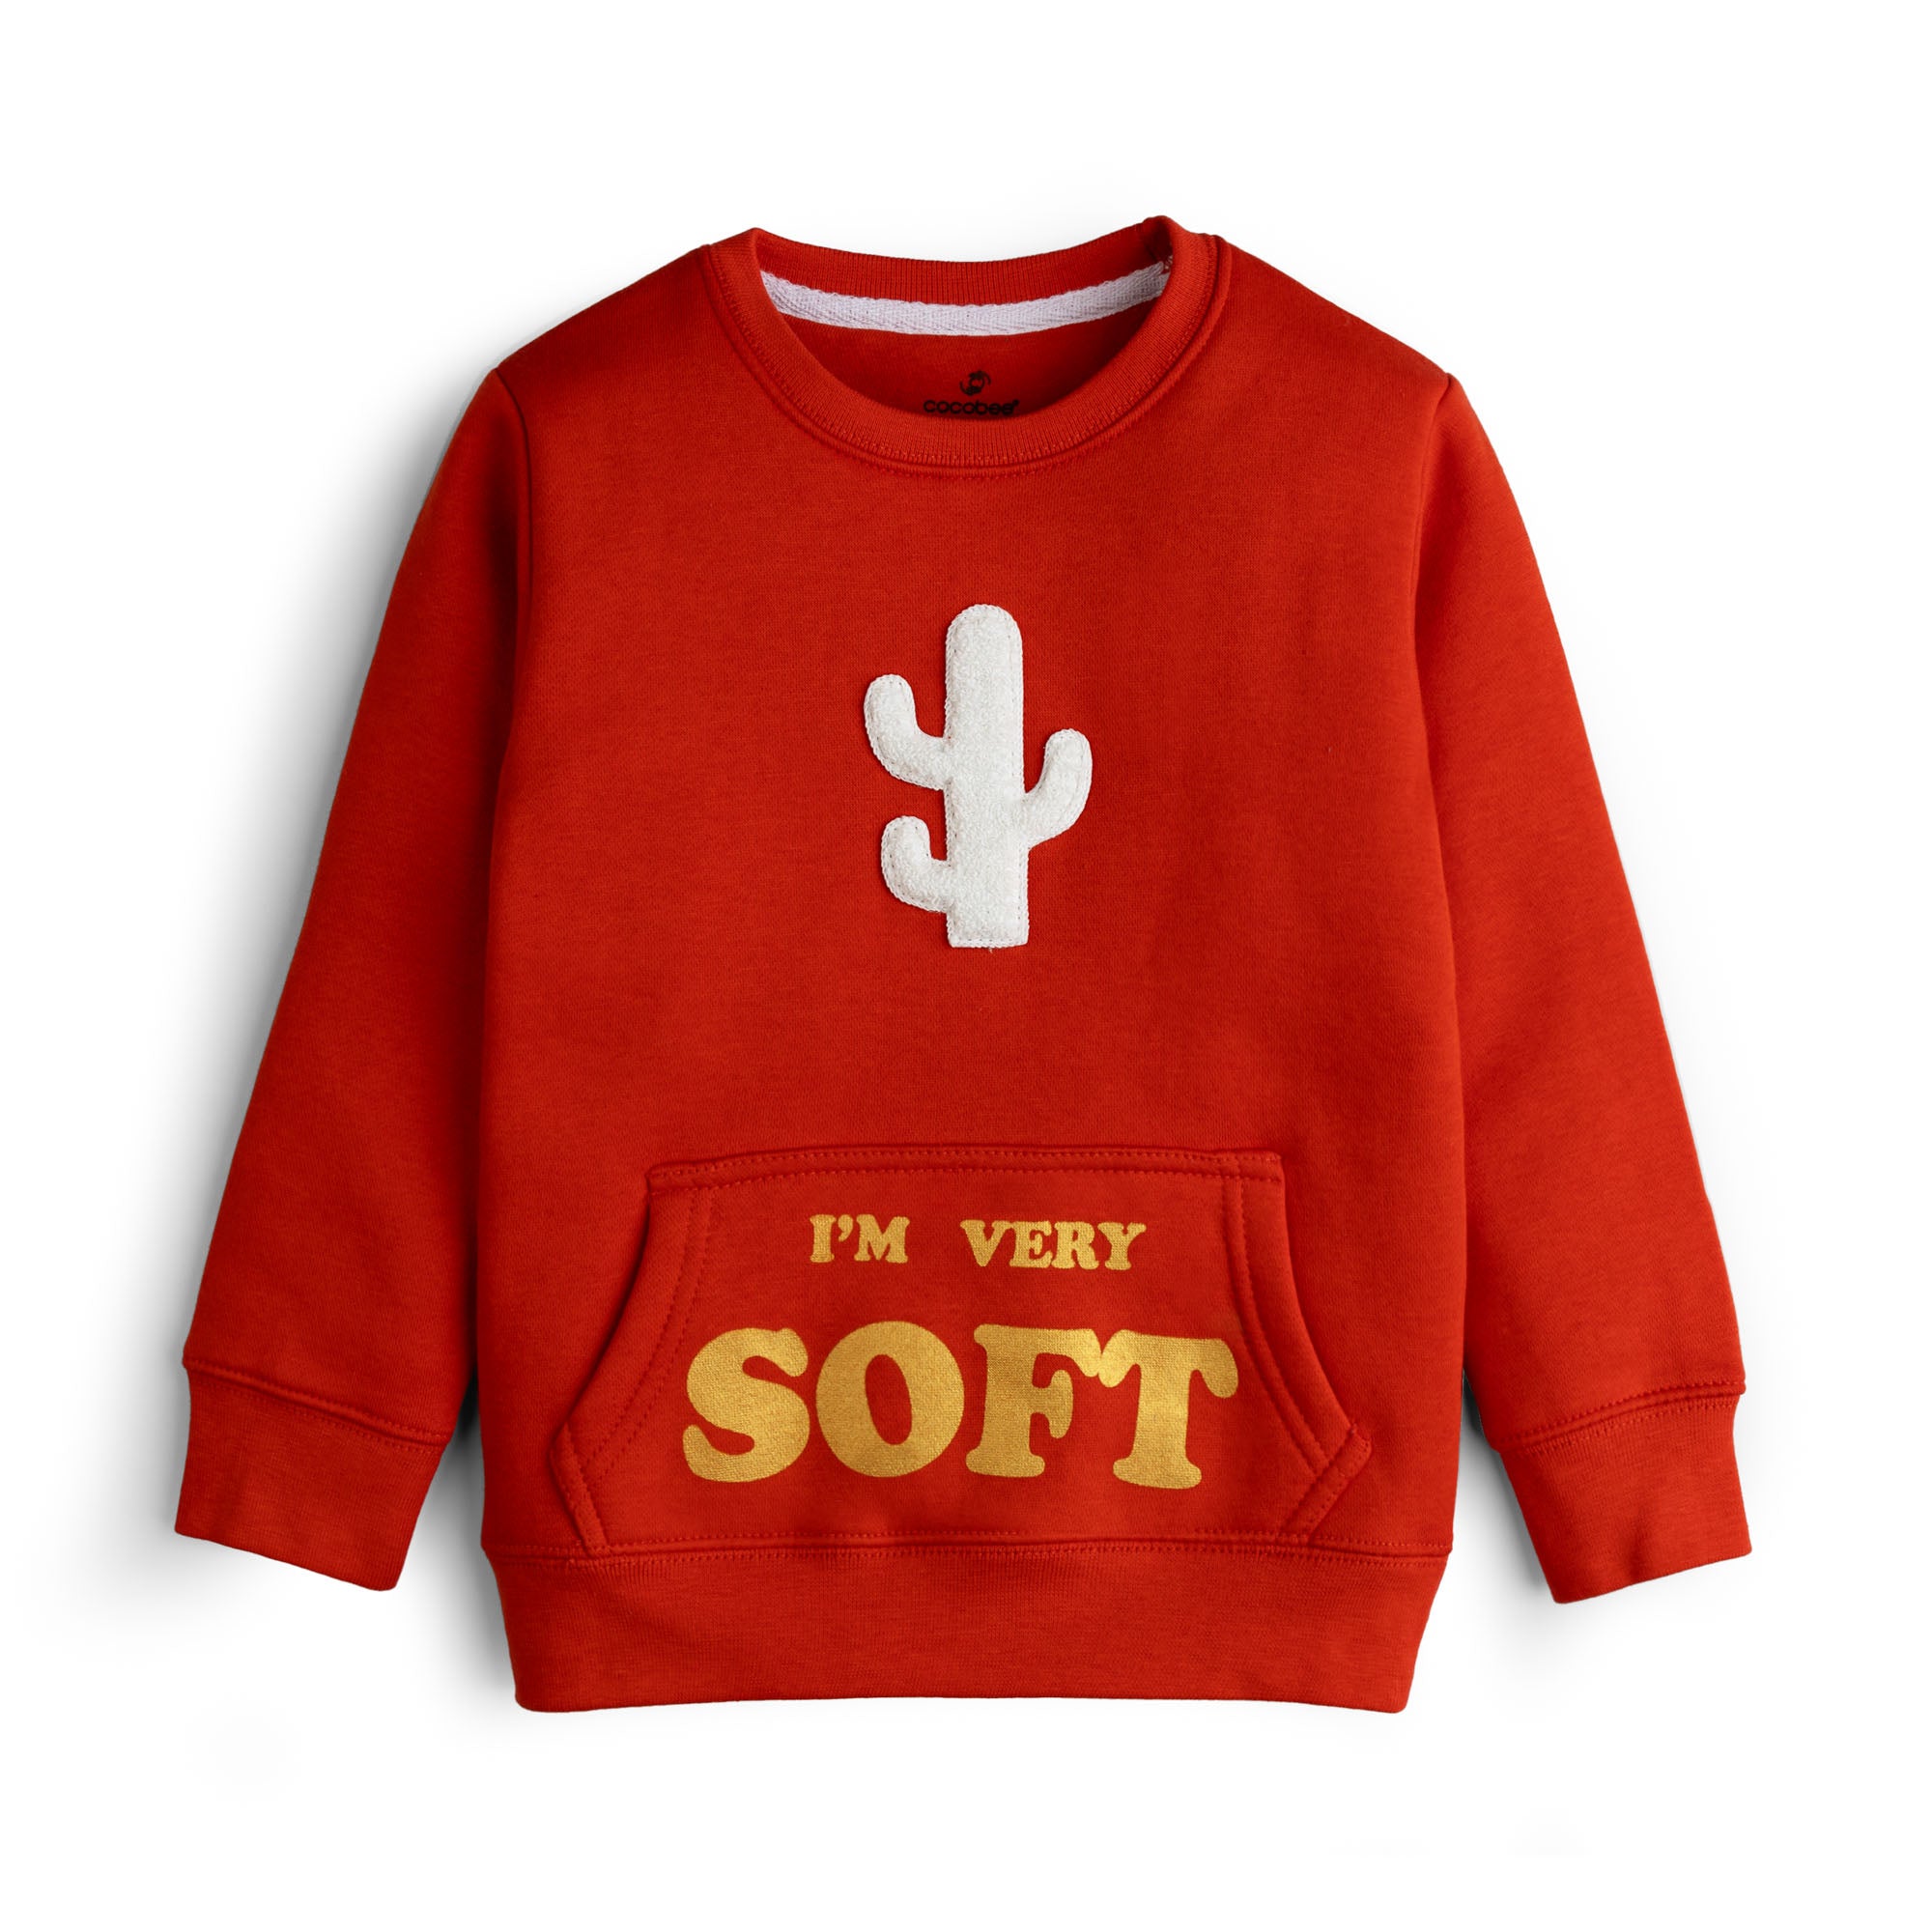 Soft Red Sweatshirt